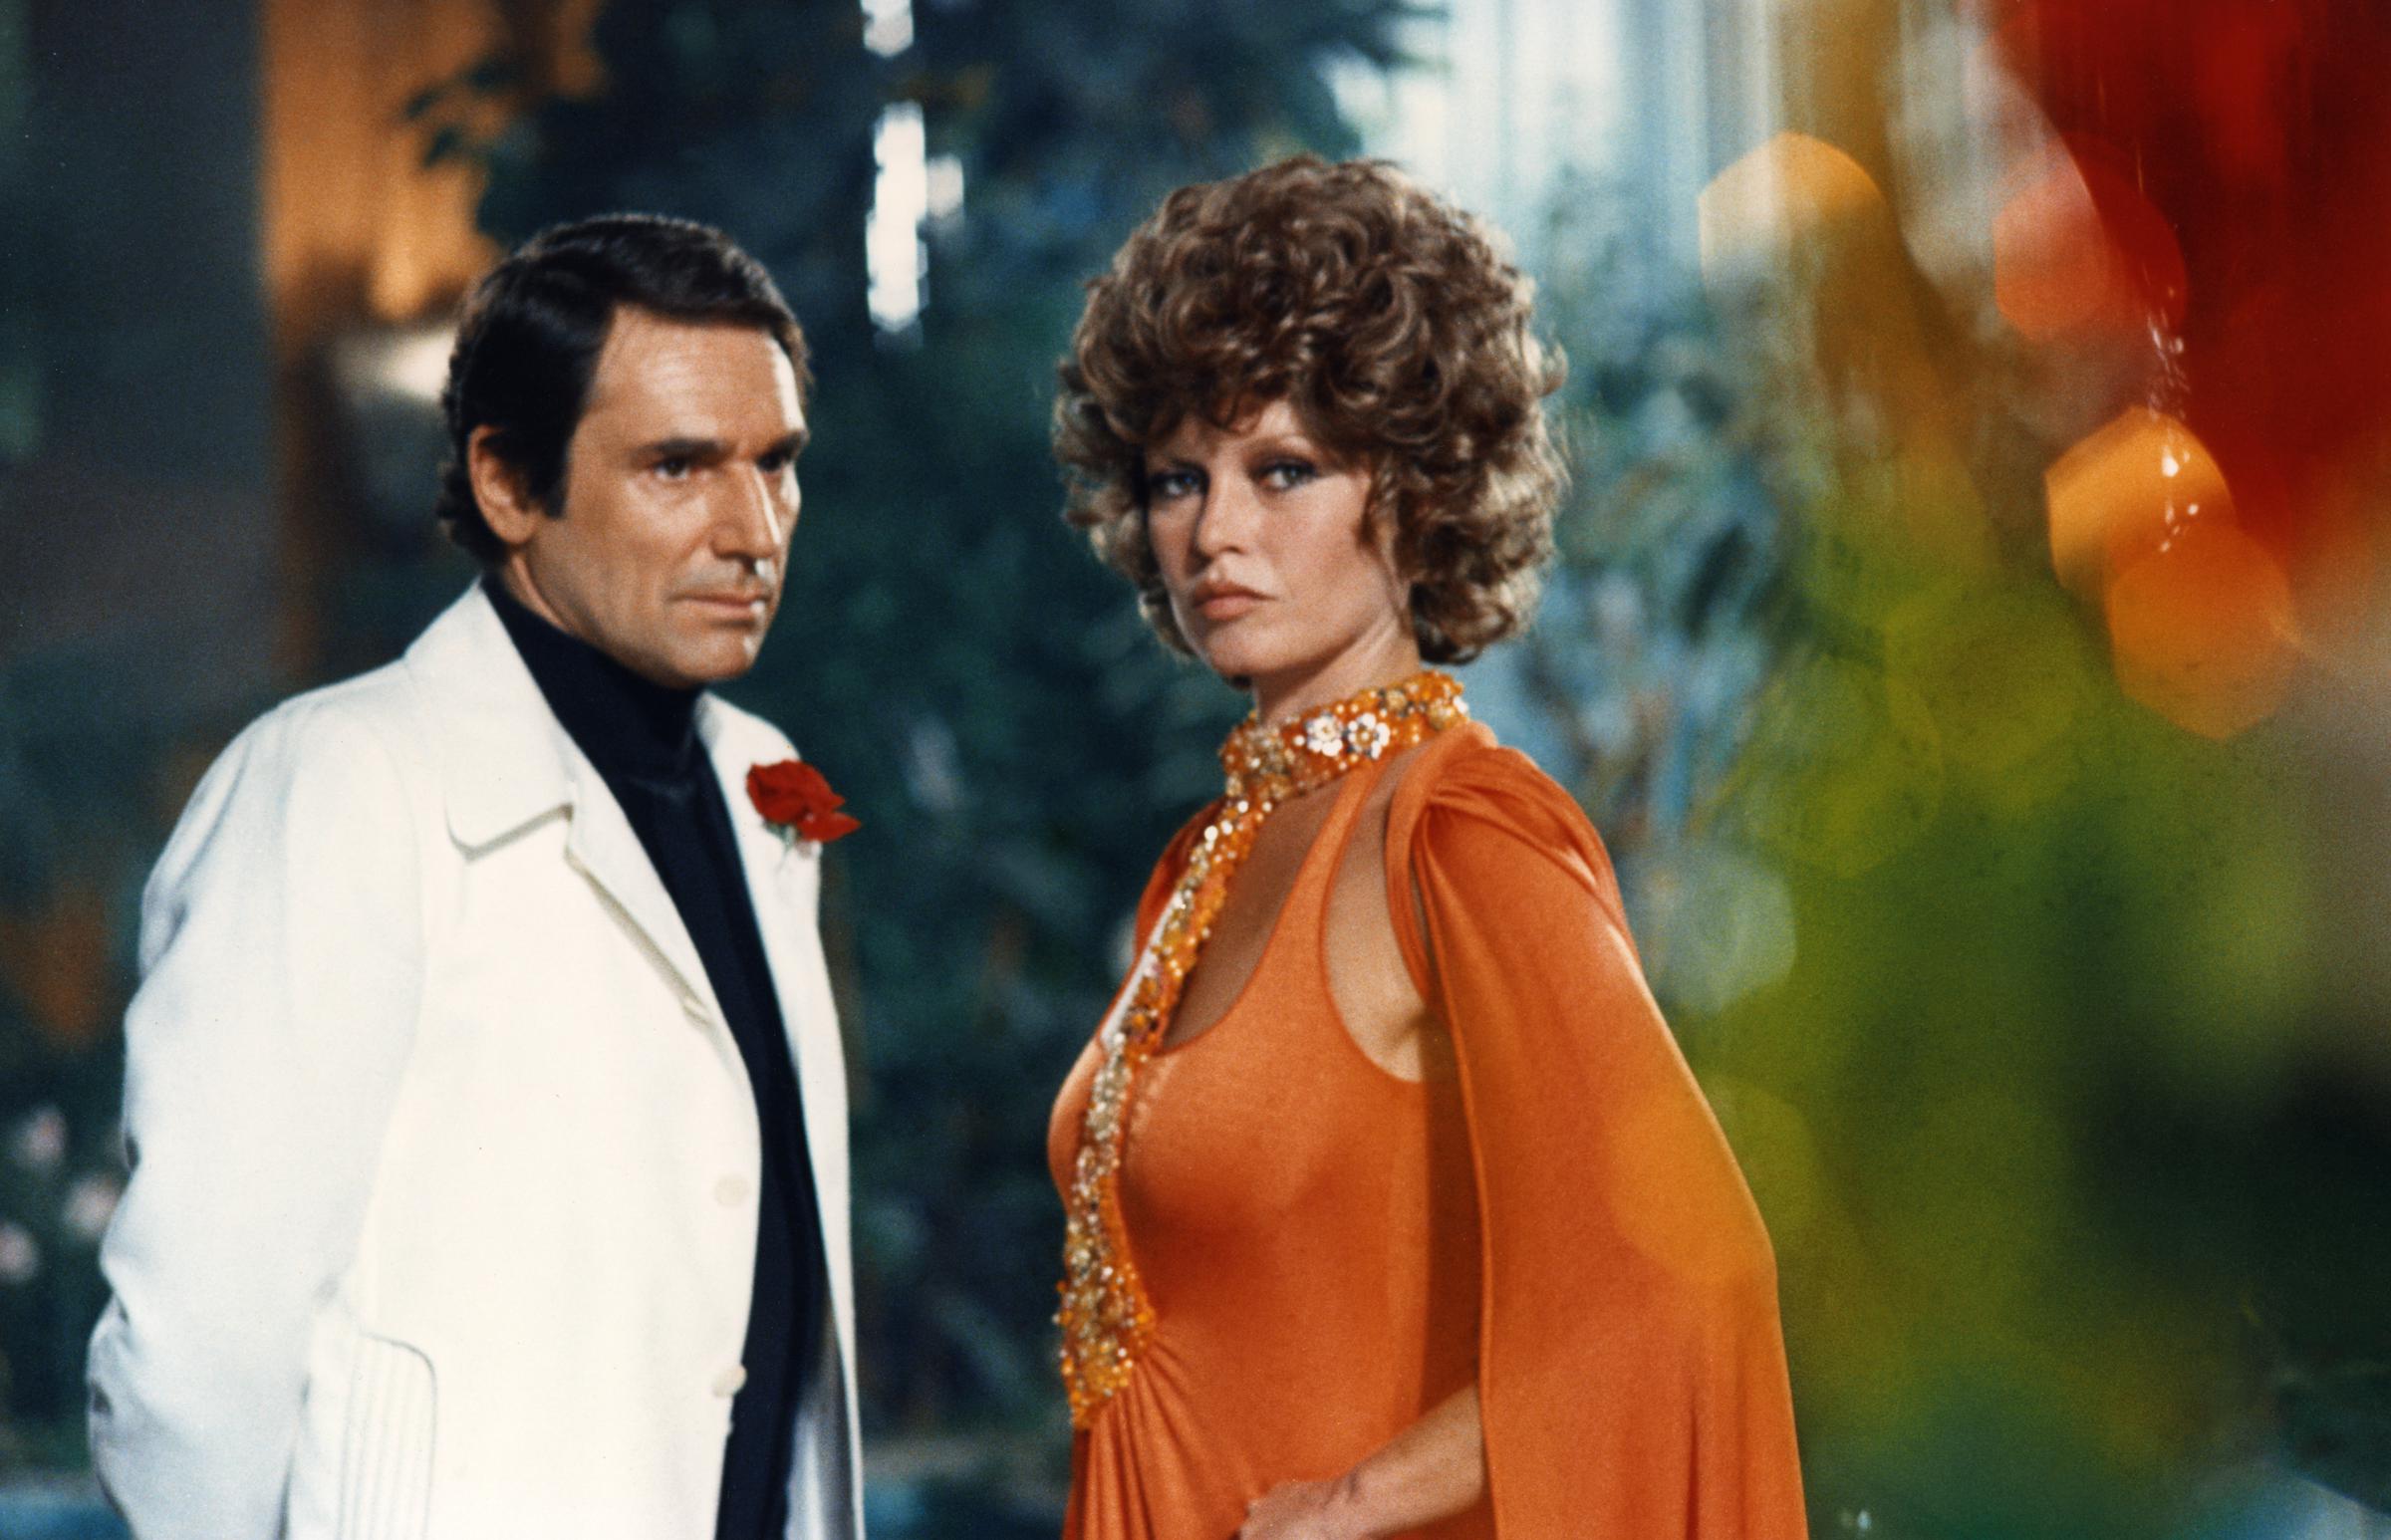 Robert Hossein and Brigitte Bardot on the set of "Don Juan ou Si Don Juan était une femme" on January 1, 1973. | Source: Getty Images